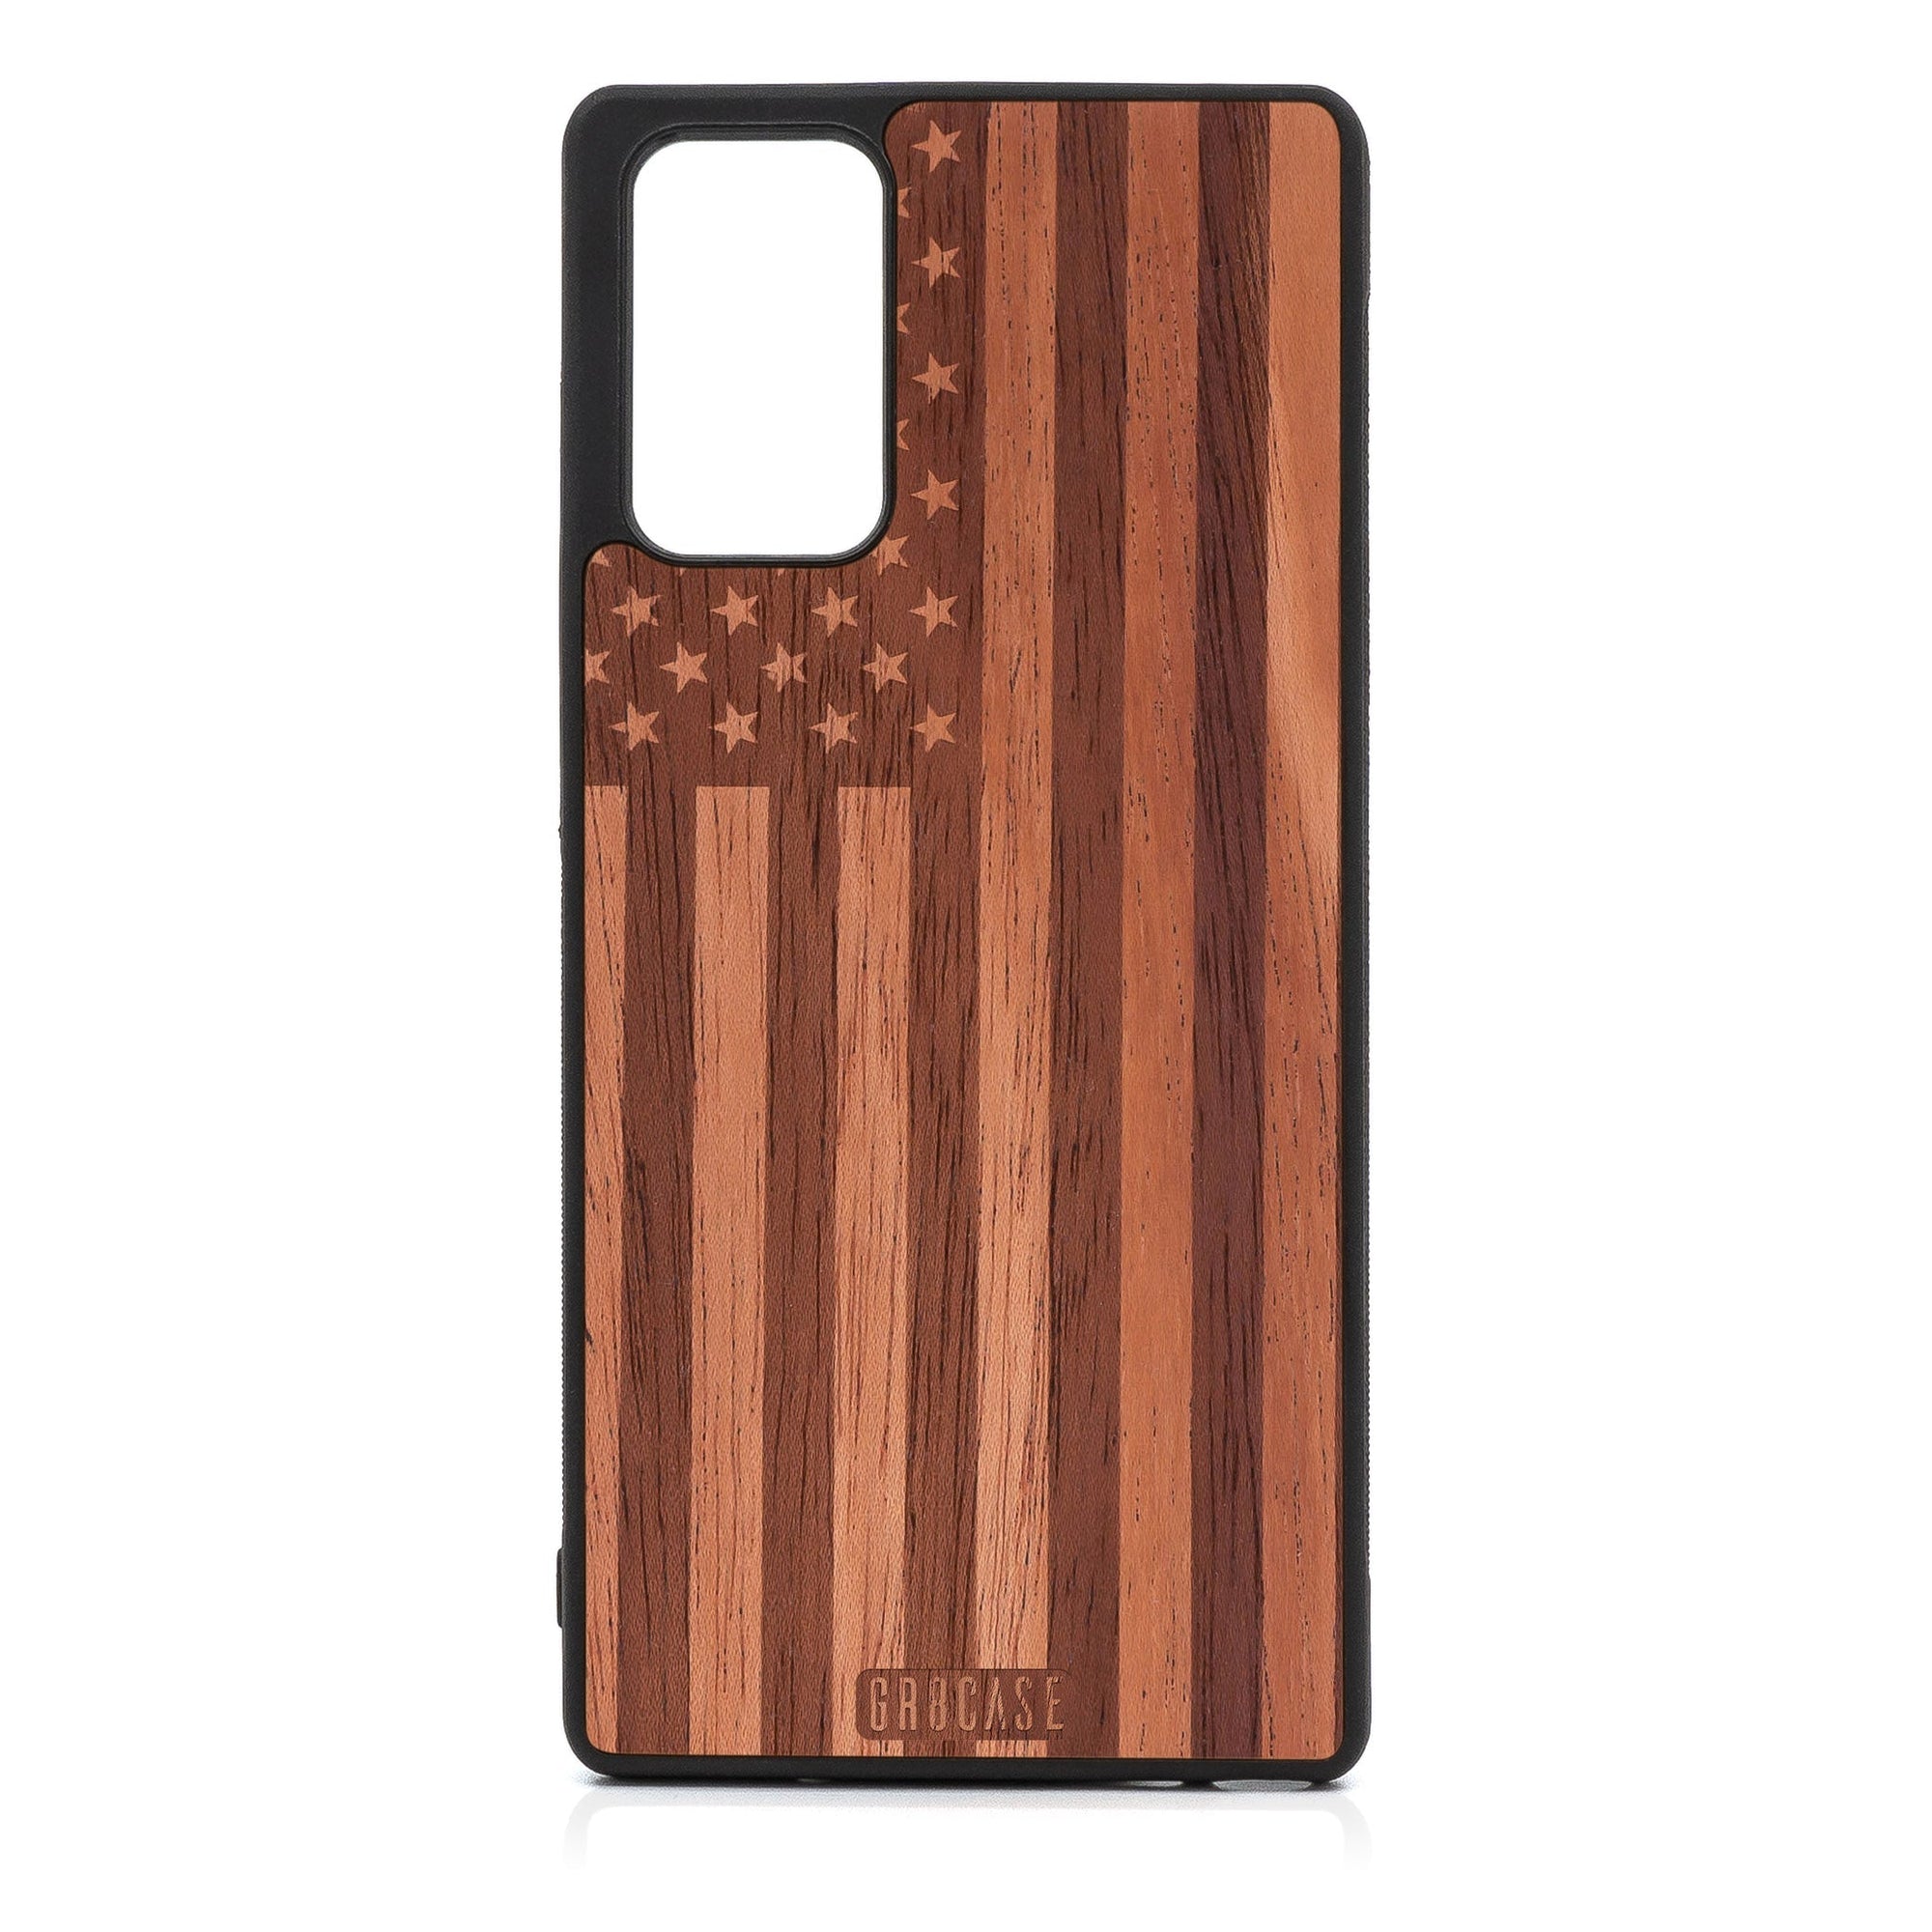 USA Flag Design Wood Case For Samsung Galaxy A71 5G